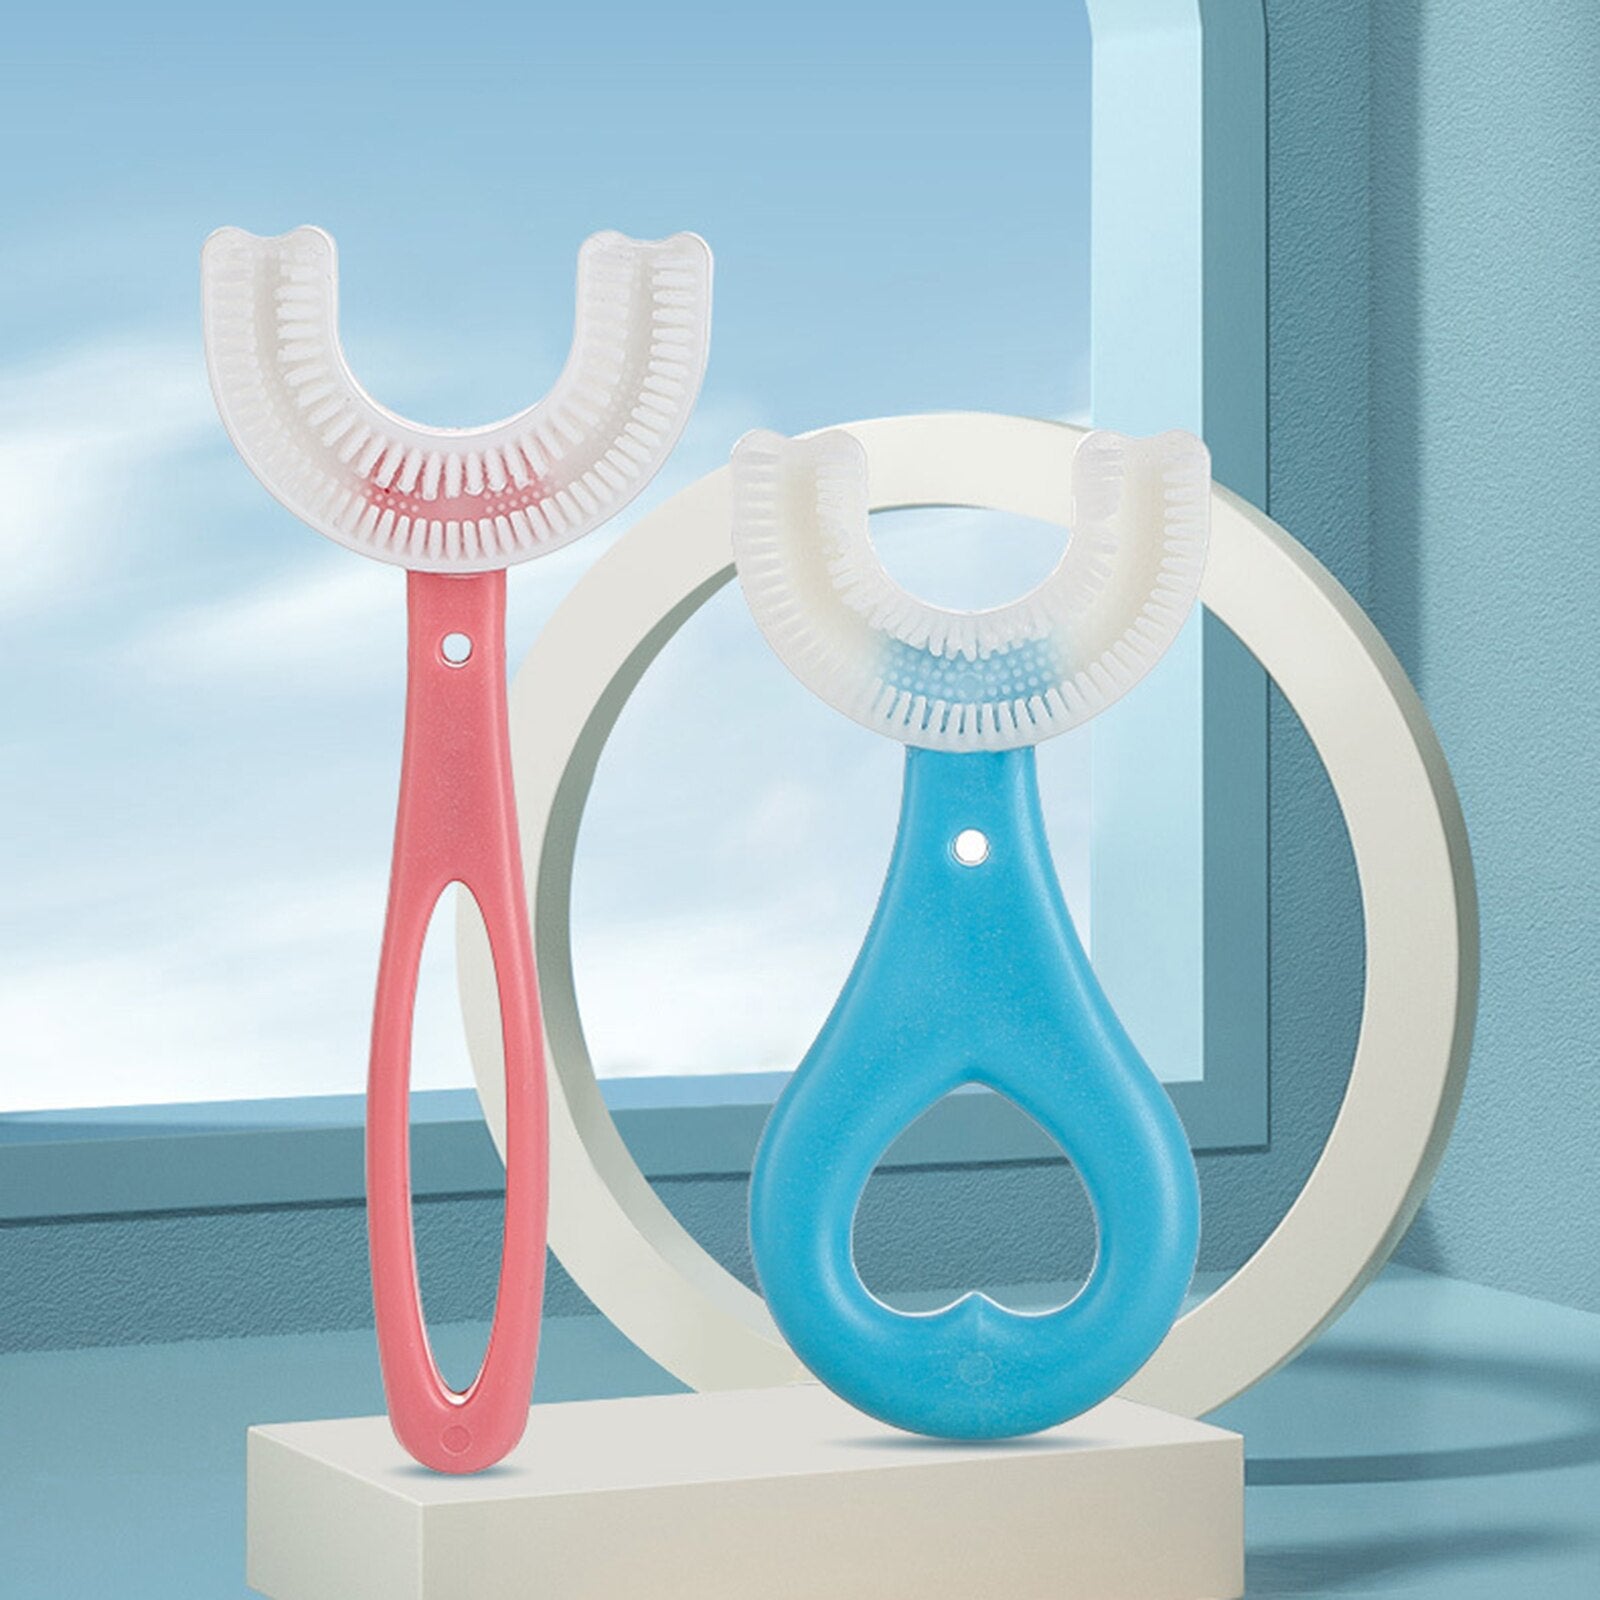 Soft Silicone Toothbrush - Baby Nurish 